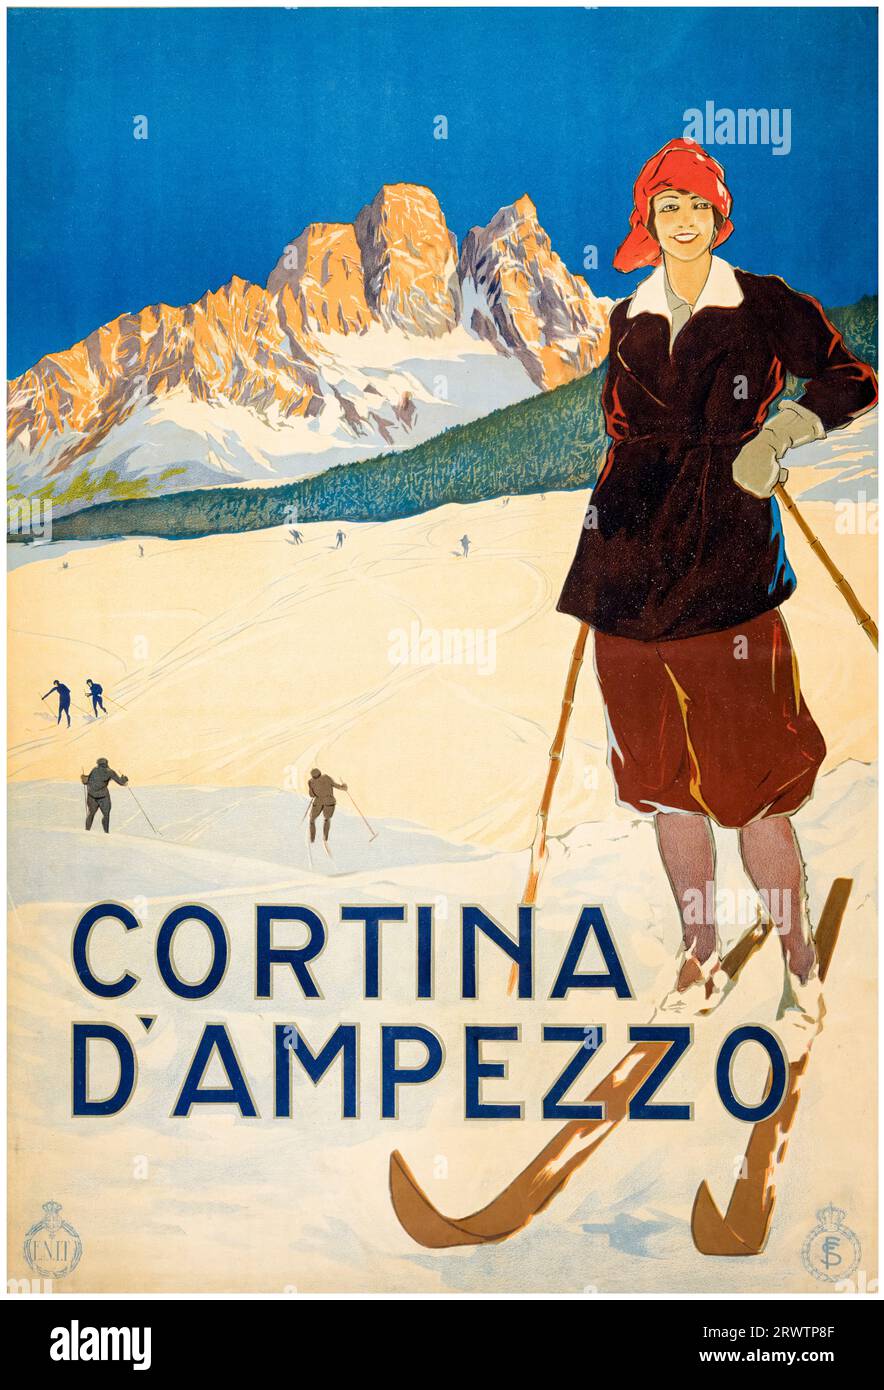 Cortina d'Ampezzo, Ski Resort, Italien, italienisches Vintage-Reiseplakat, um 1920 Stockfoto